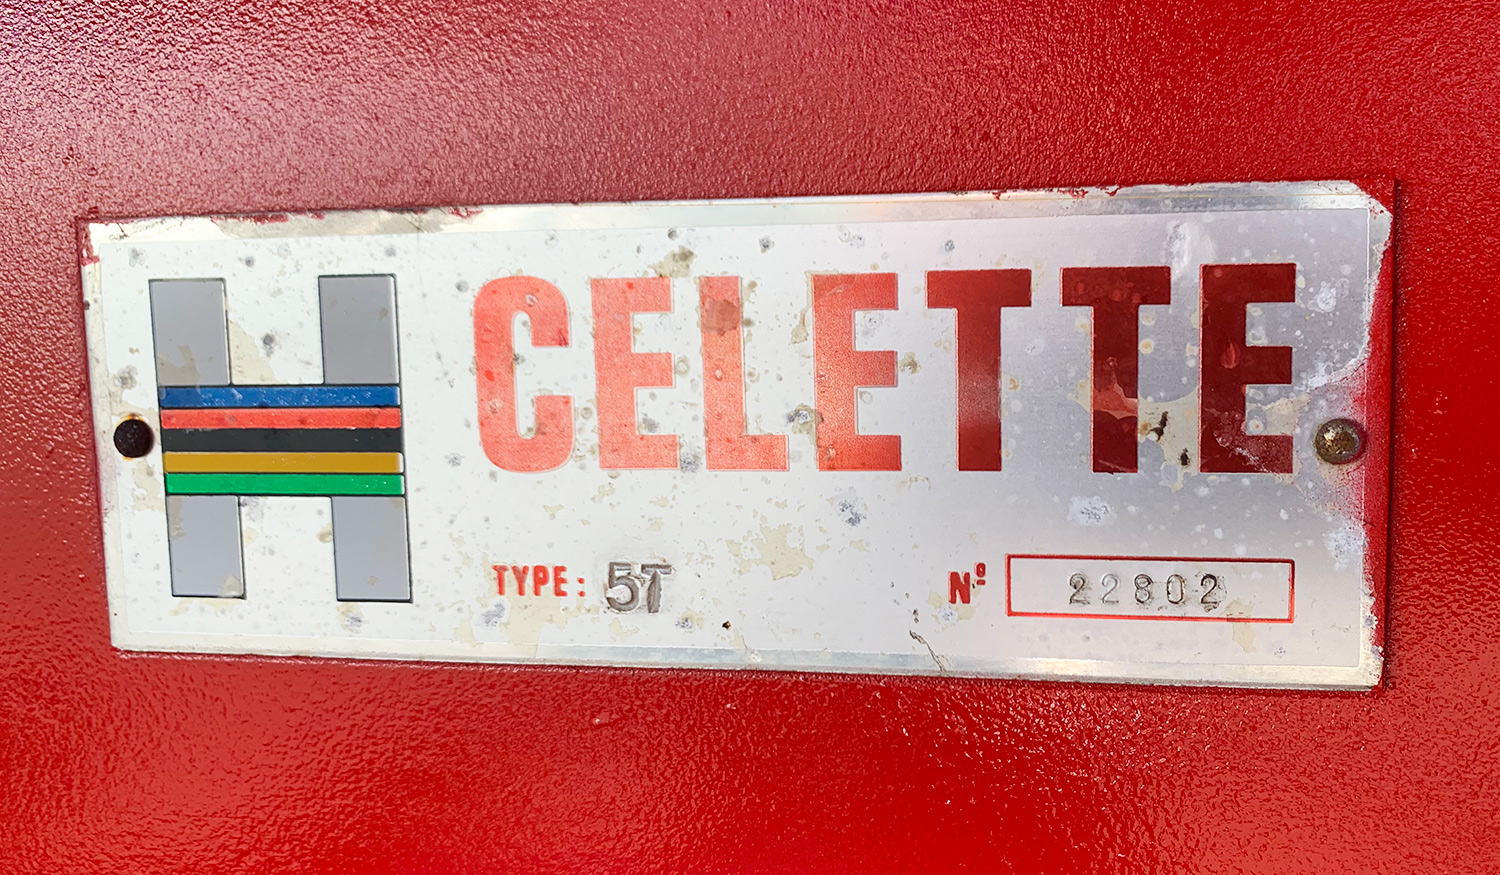 Celette Frame Machine